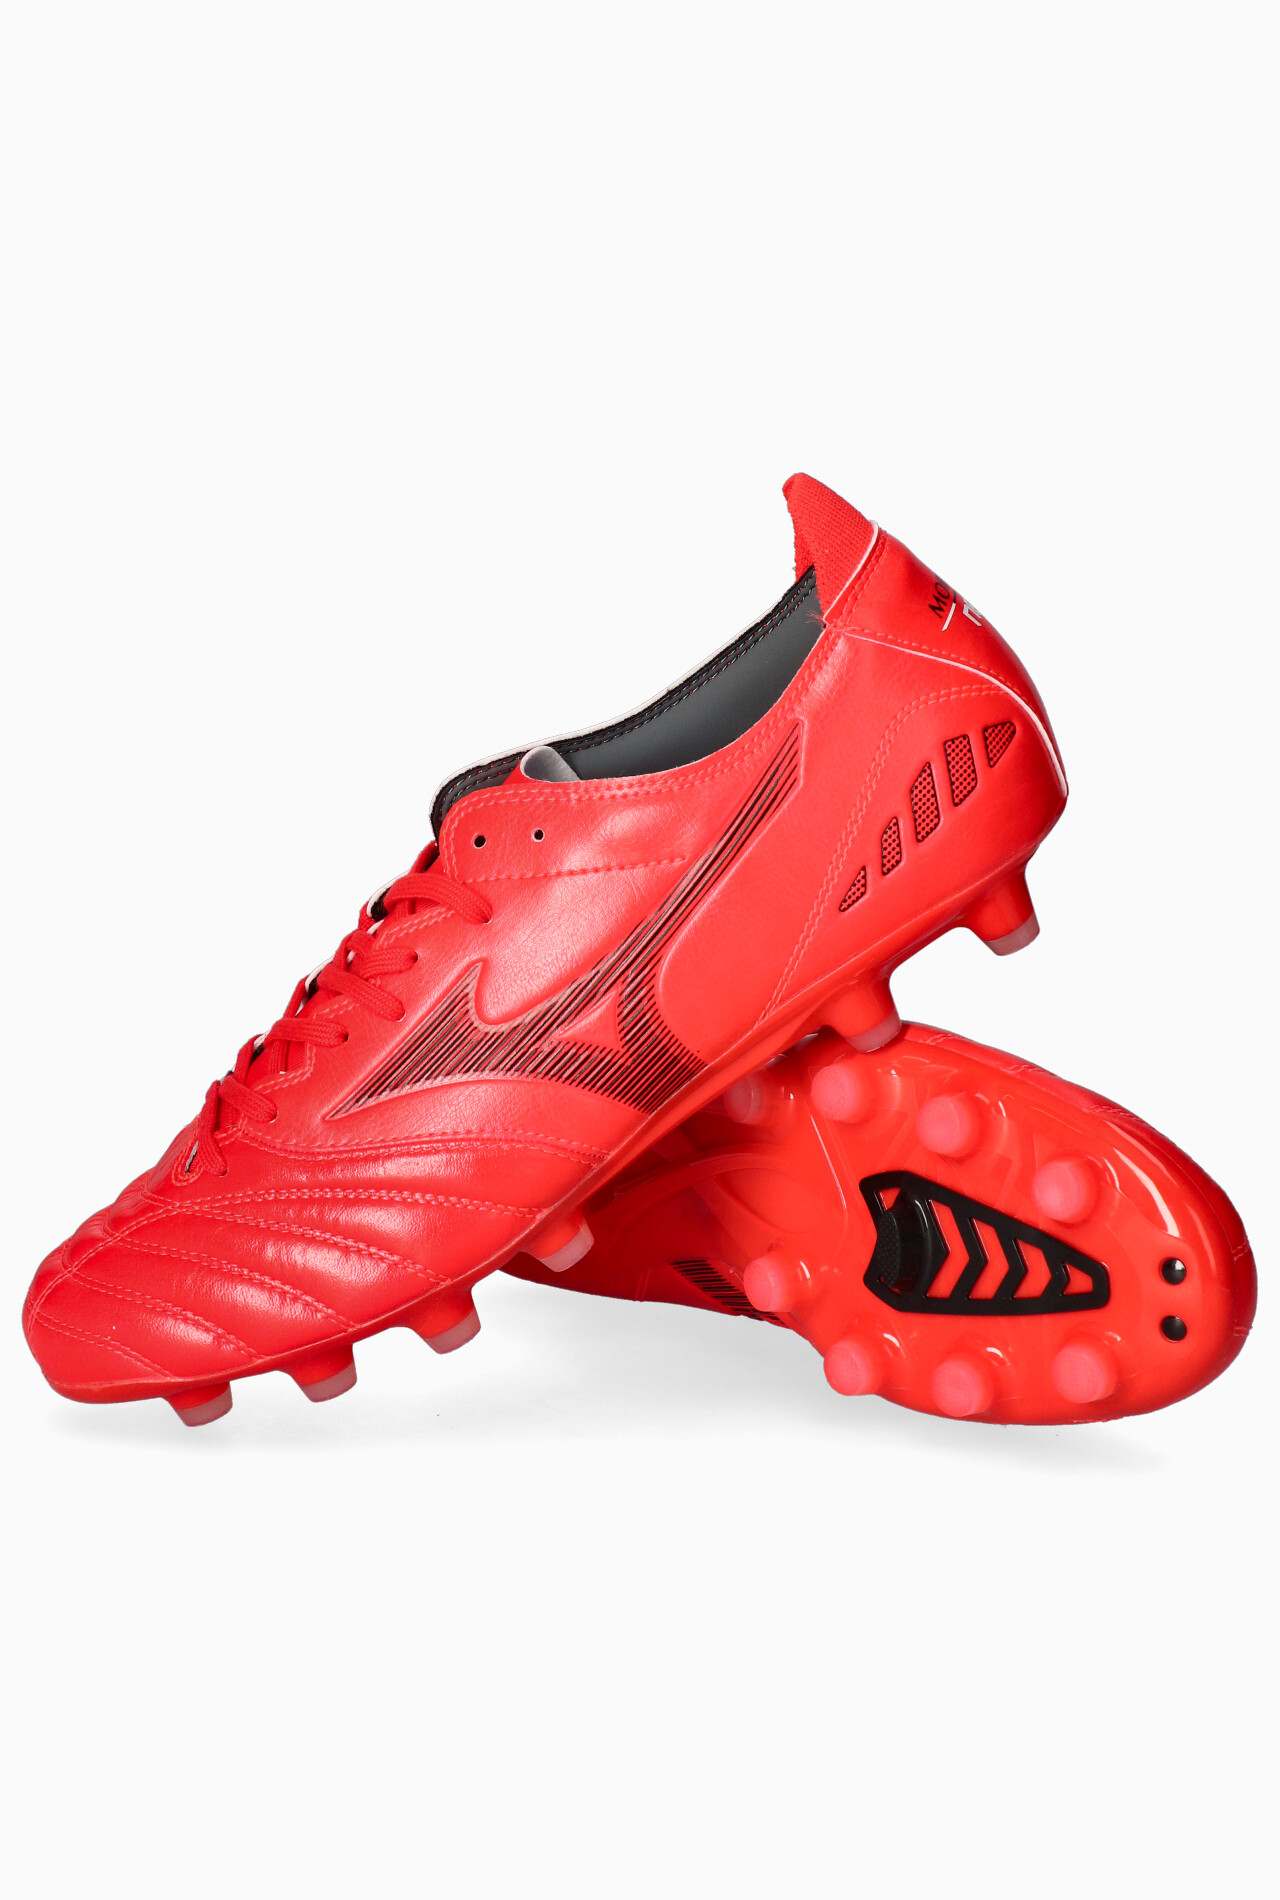 Mizuno Morelia Neo 3 Pro MD | R-GOL.com - Football boots & equipment